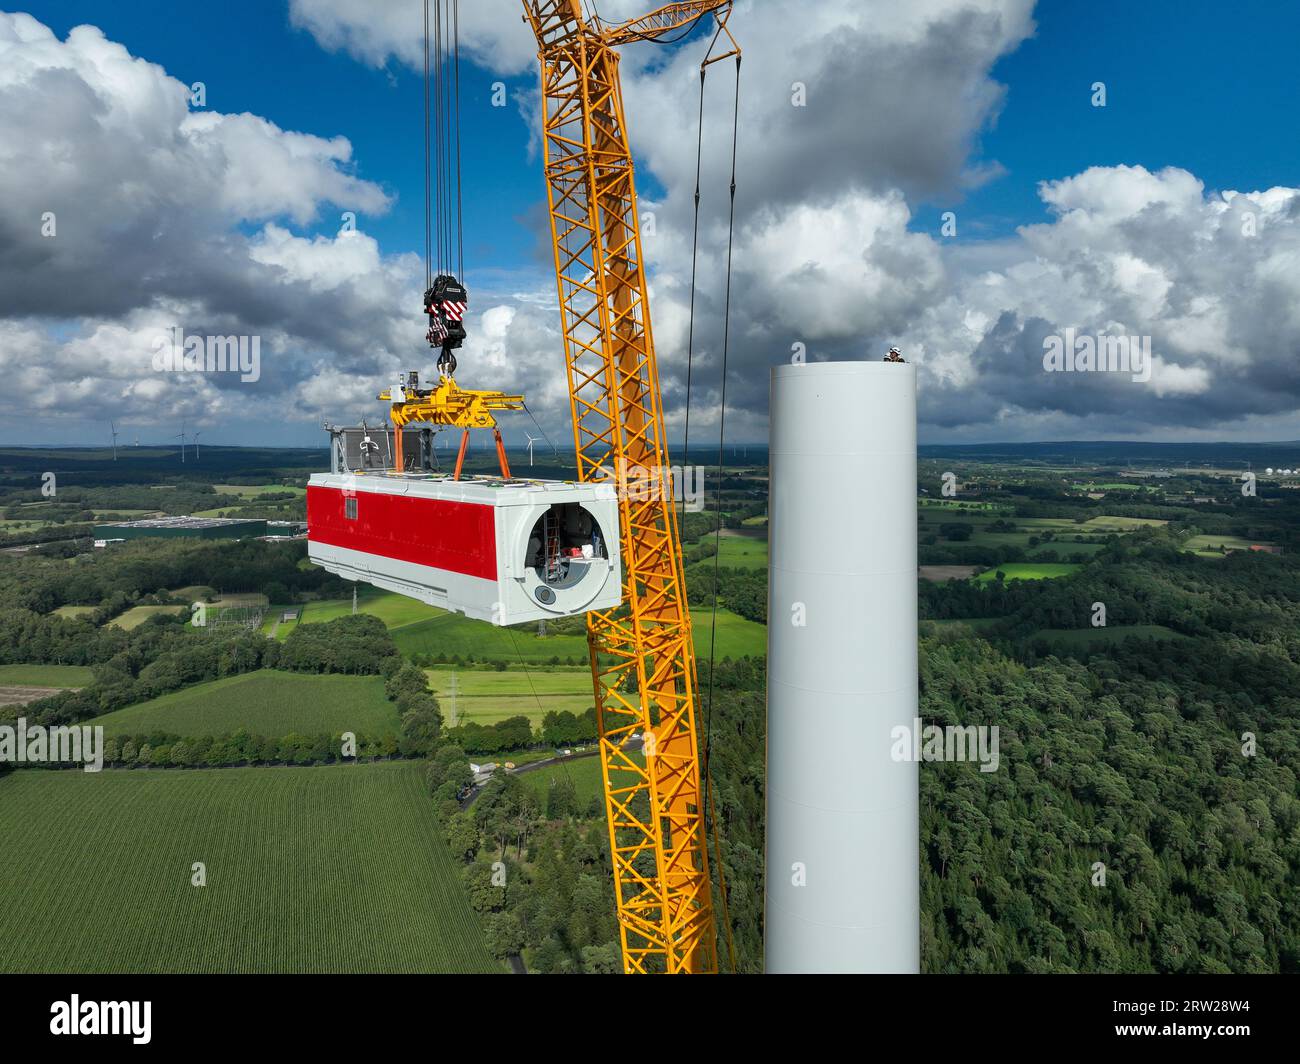 12.08.2023, Germany, North Rhine-Westphalia, Dorsten - Construction of a wind turbine, the first wind turbine of the Grosse Heide wind farm. A mobile Stock Photo